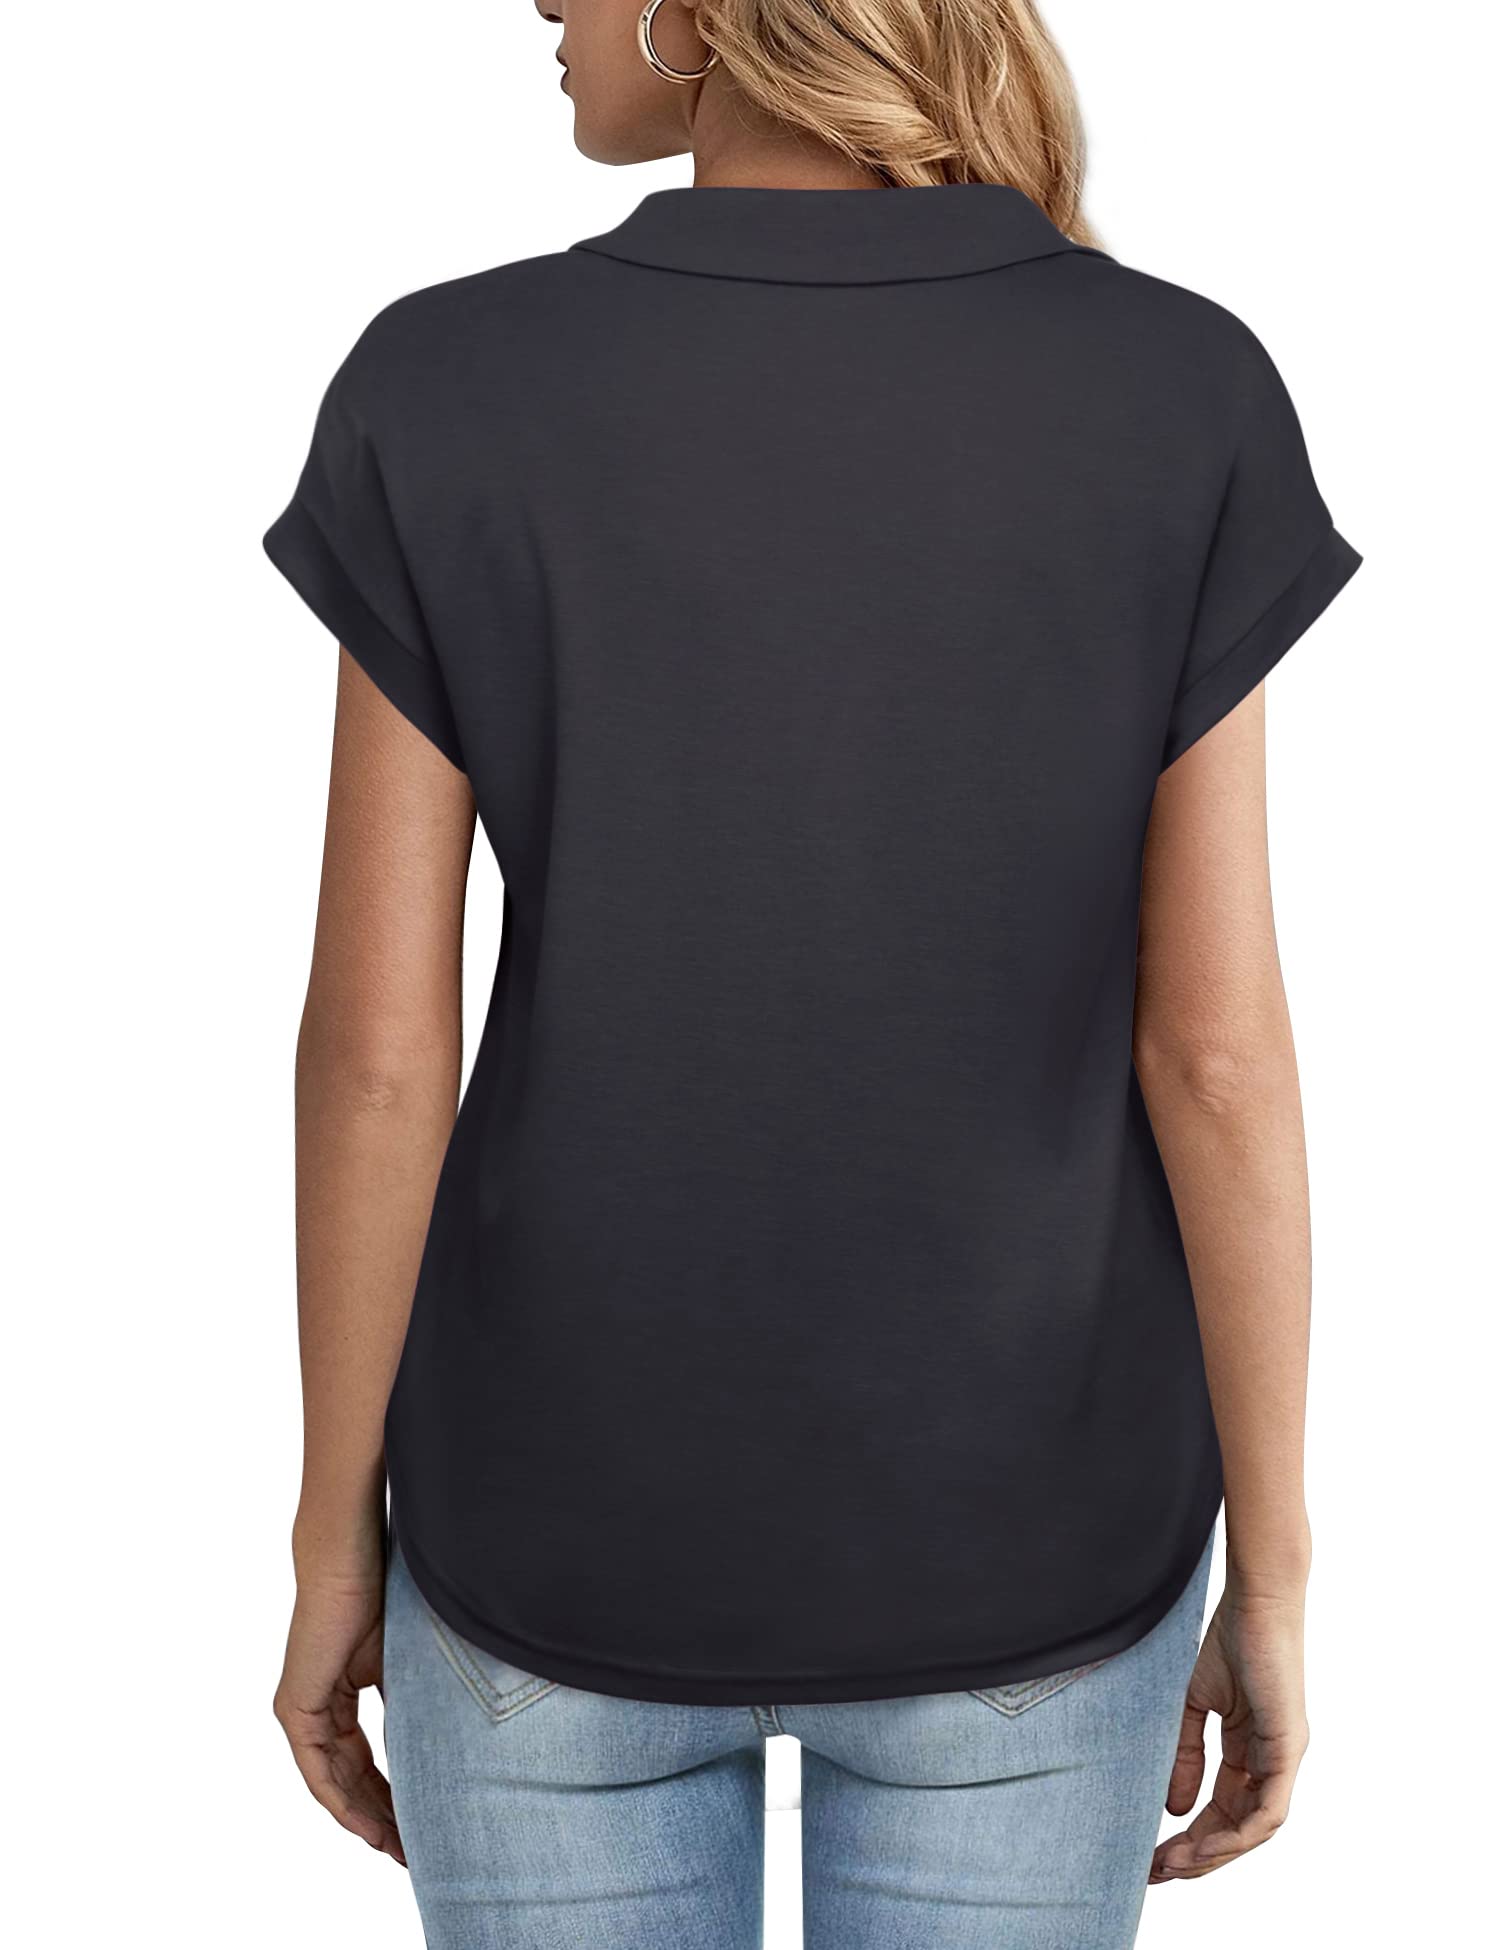 Women's T-Shirts Short Sleeve Collared V Neck T-Shirt - MsDressly